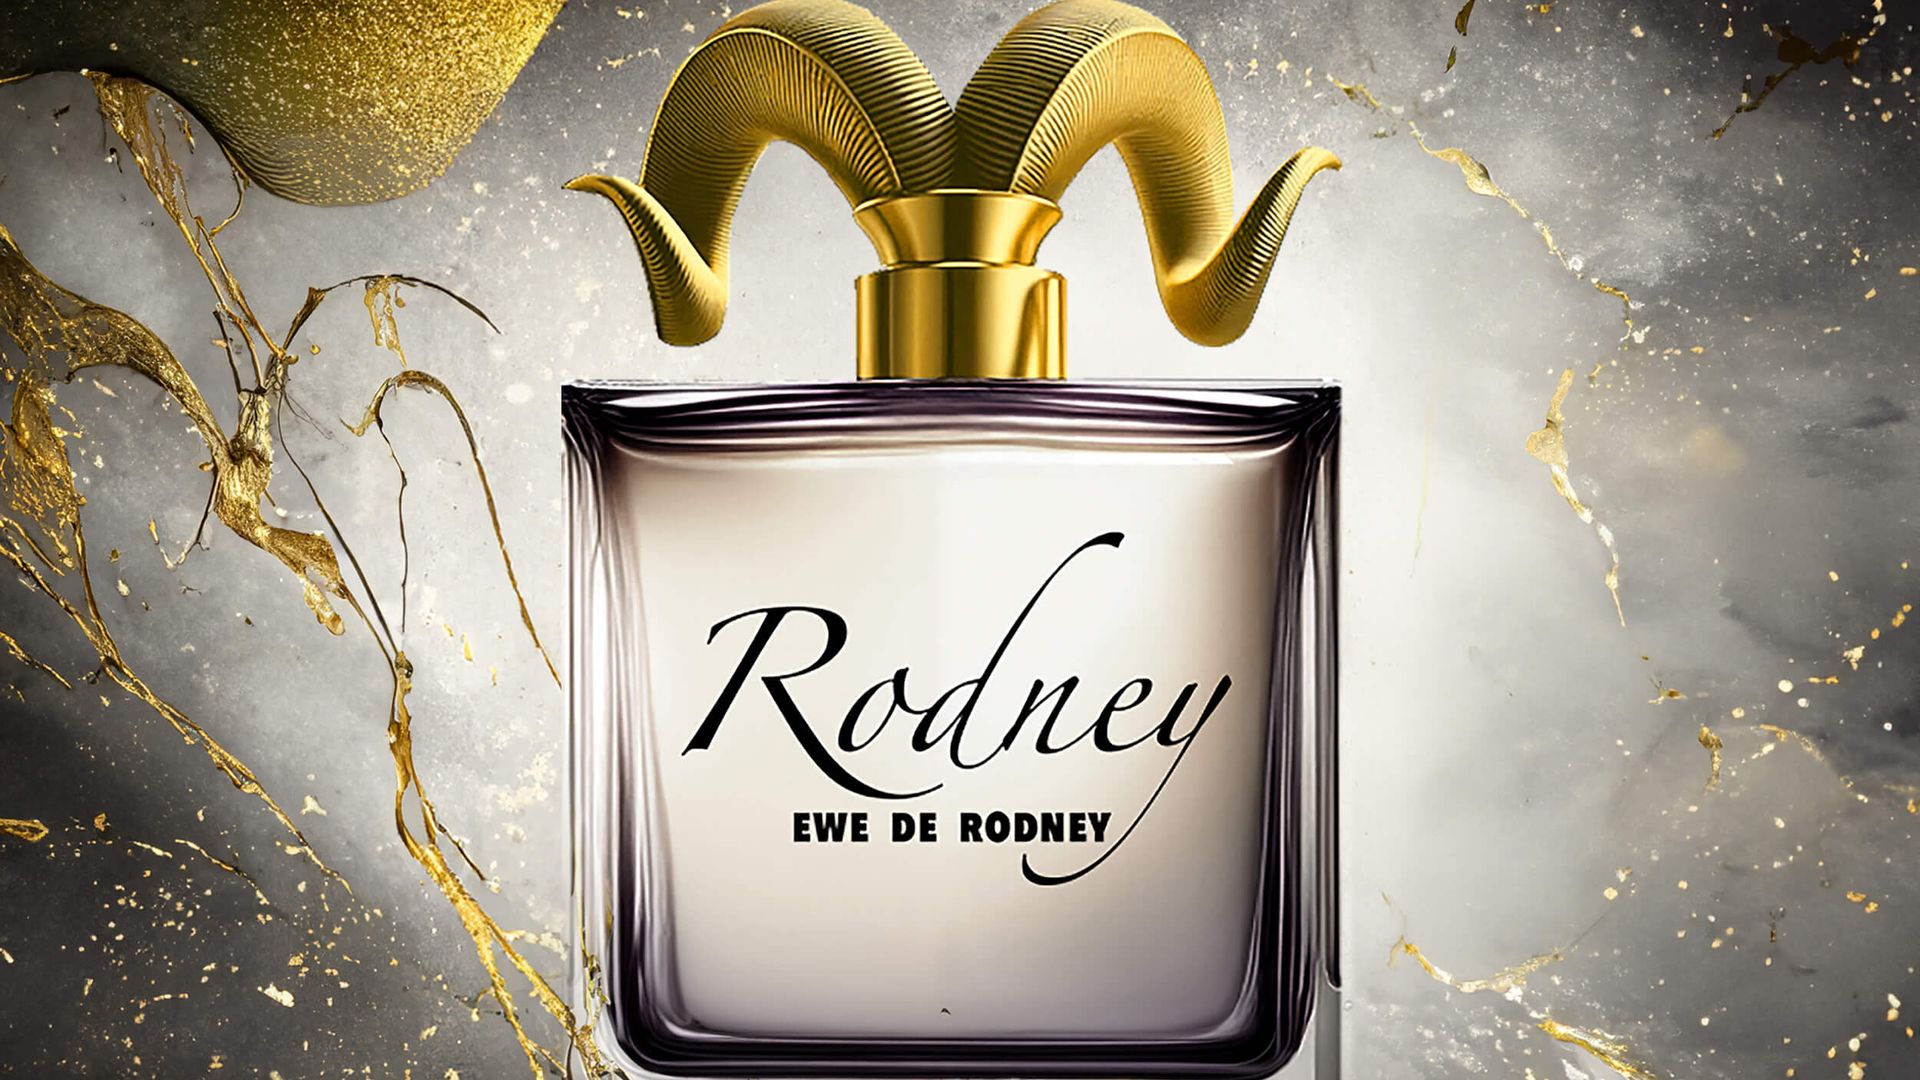 A bottle of perfume with ram horns on it called Rodney, Ewe de Rodney 